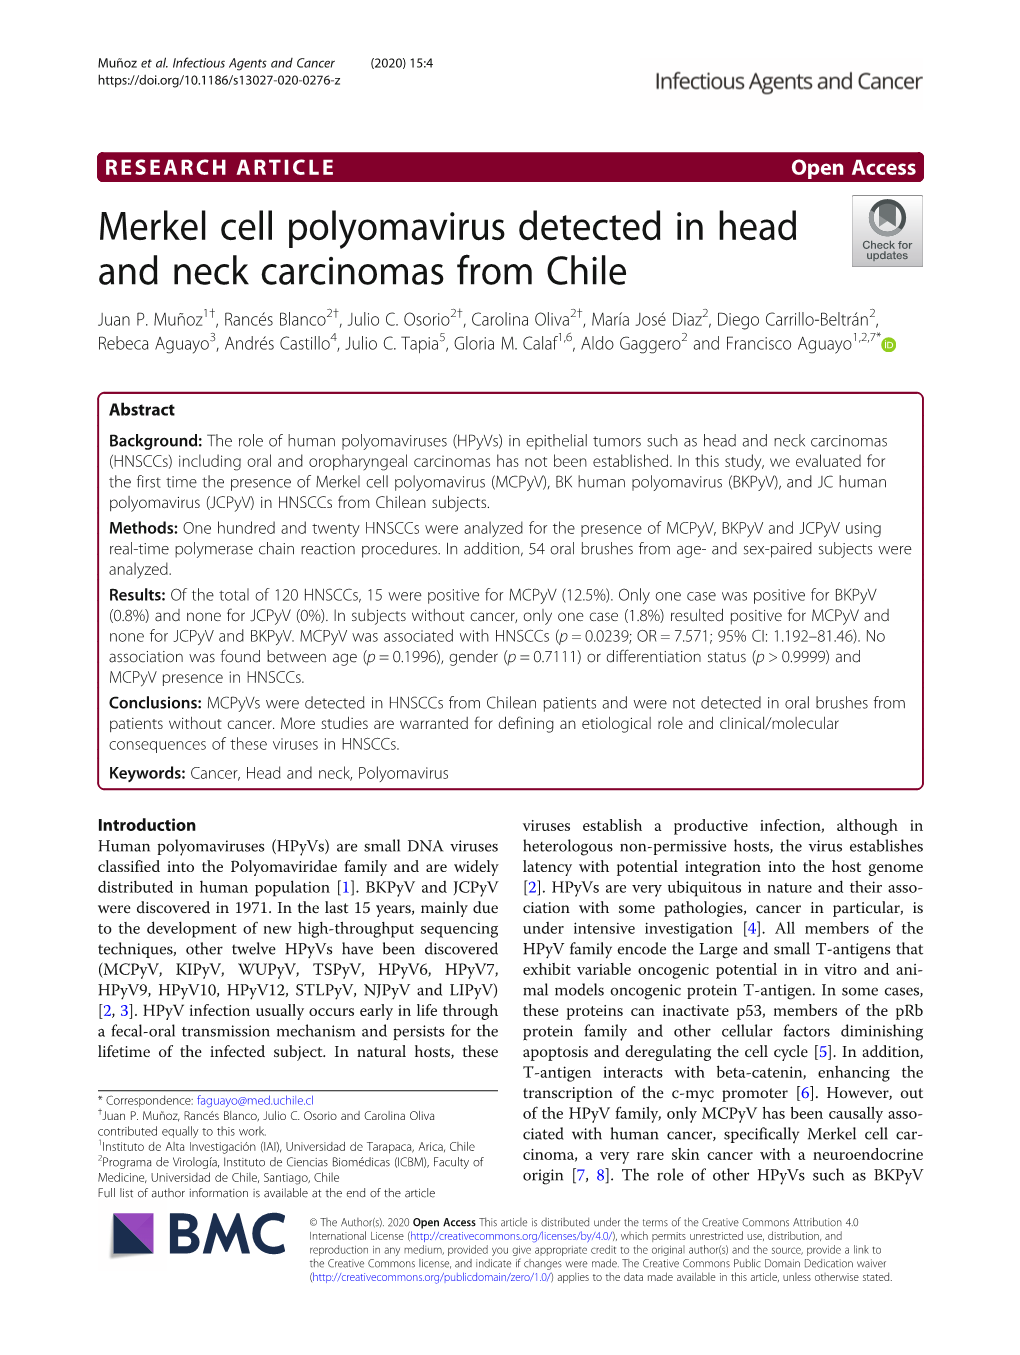 Merkel Cell Polyomavirus Detected in Head and Neck Carcinomas from Chile Juan P